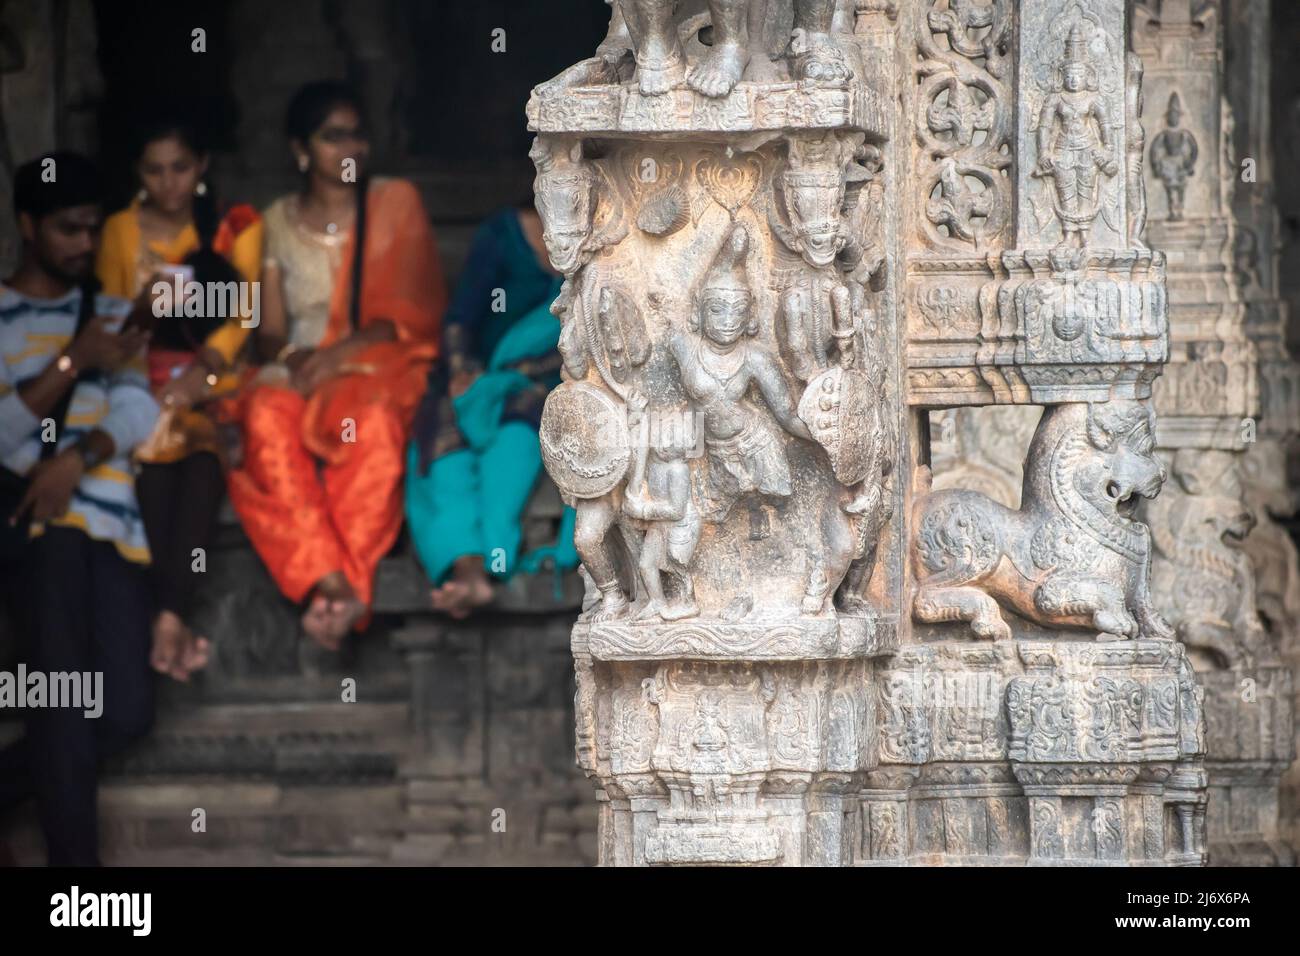 Vellore, Tamil Nadu, India - September 2018: Beautiful carvings on a stone pillar at the ancient Hindu temple of Jalakandeswarar at the Vellore fort. Stock Photo